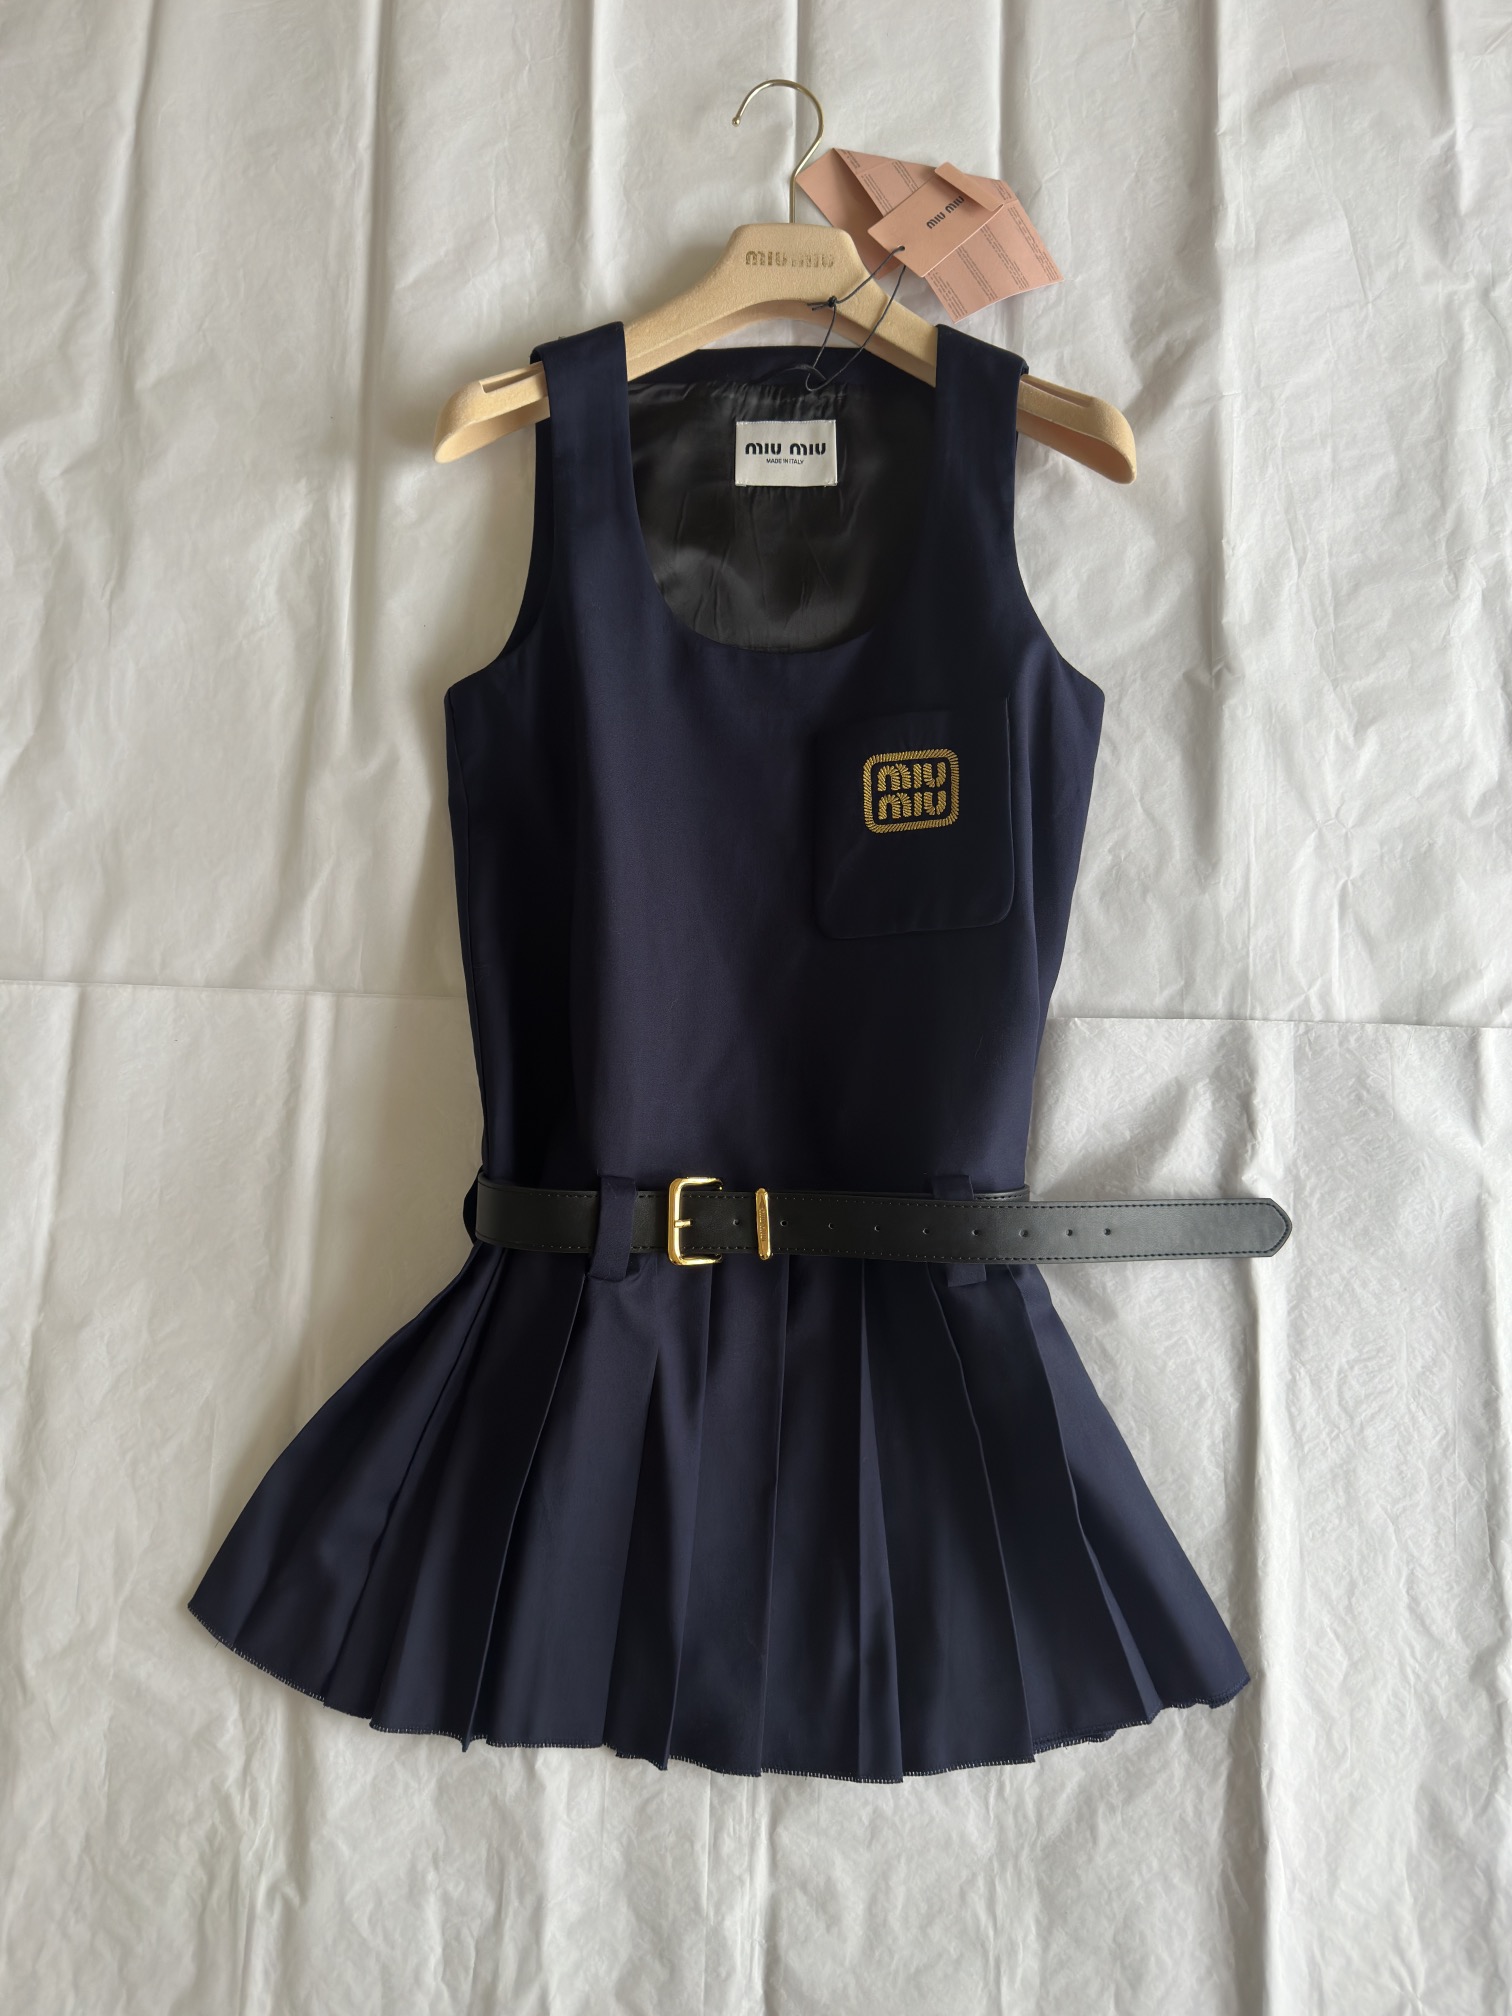 MiuMiu Clothing Dresses Tank Tops&Camis Blue Dark Spring Collection Long Sleeve